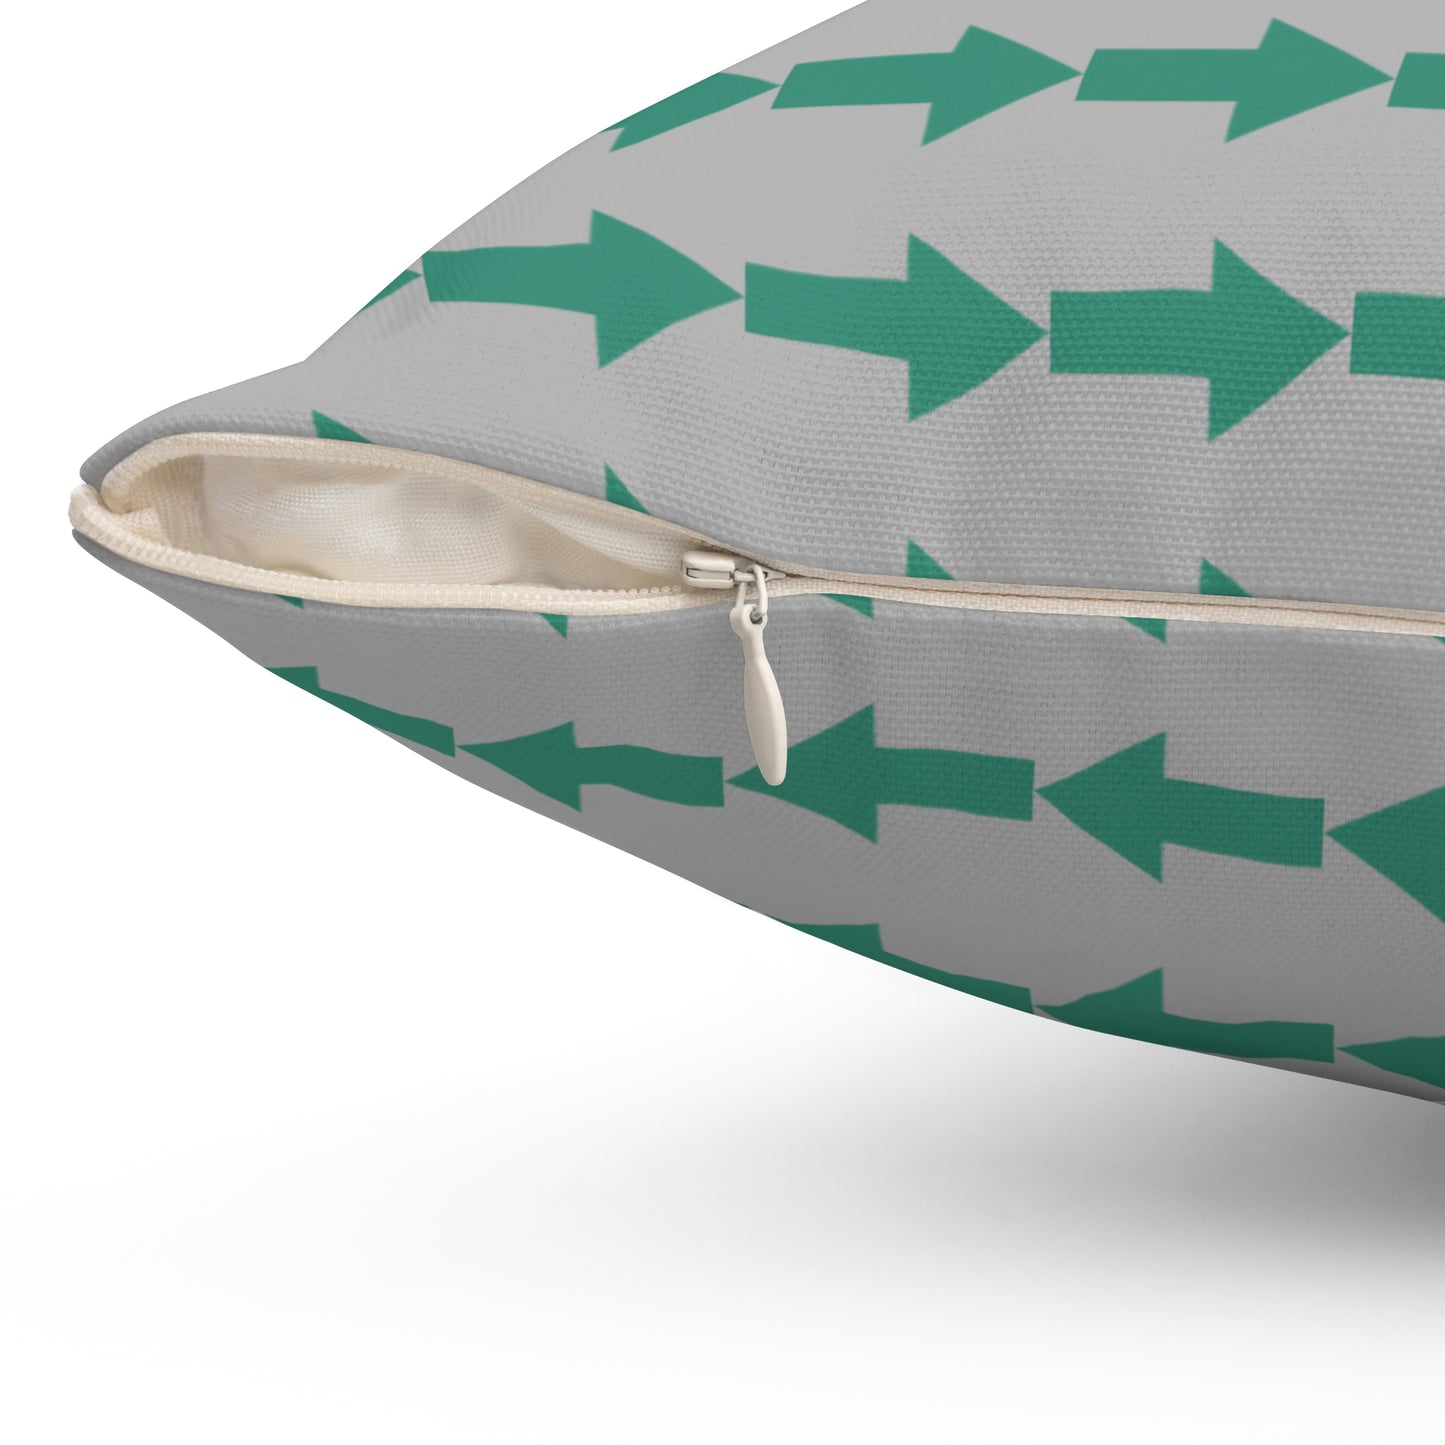 Spun Polyester Square Pillow Case "Green Arrow on Light Gray”